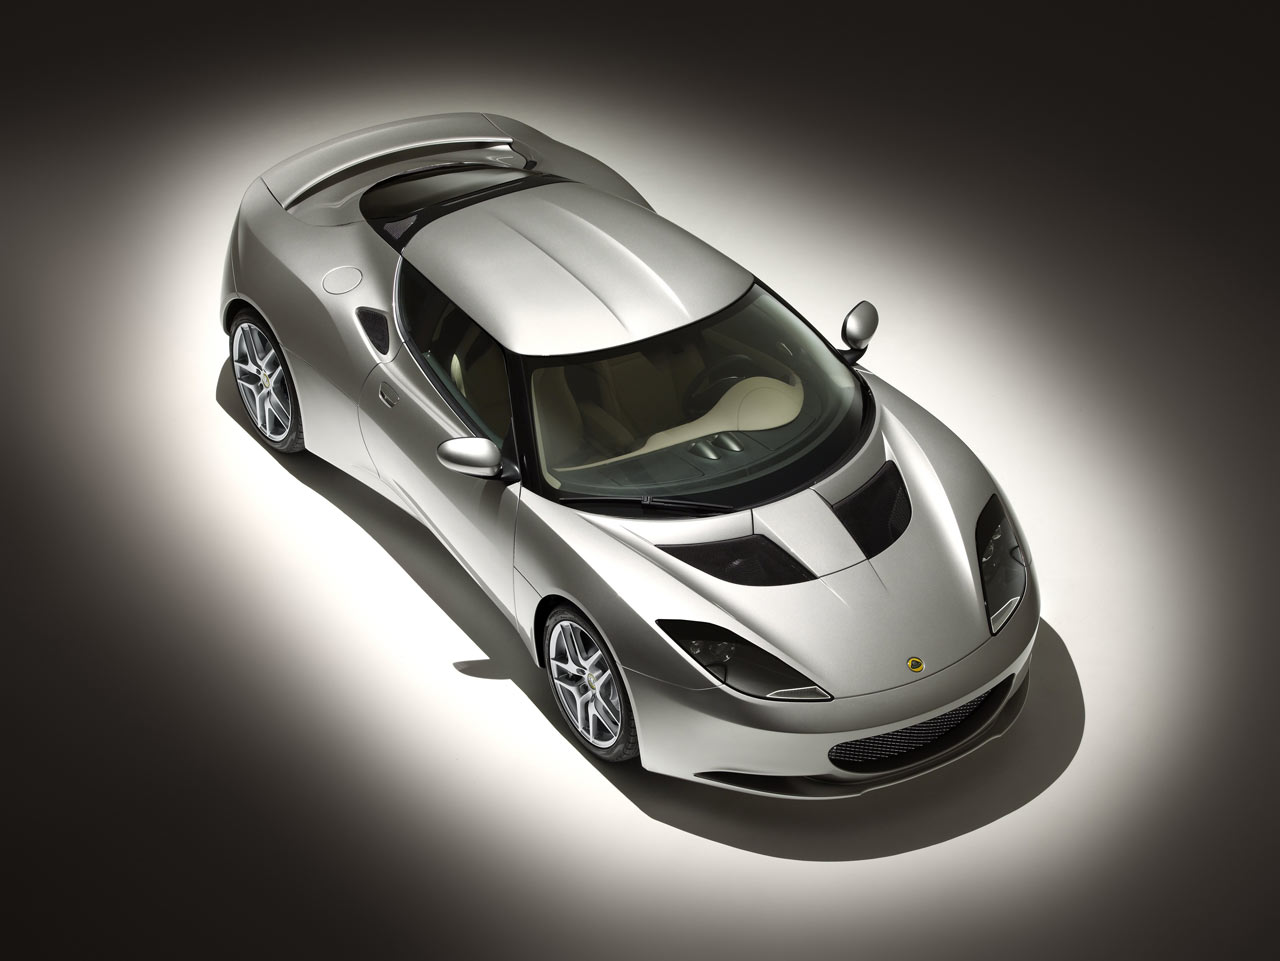 Lotus Evora - Car tuning and Modified CarsCar tuning and Modified Cars